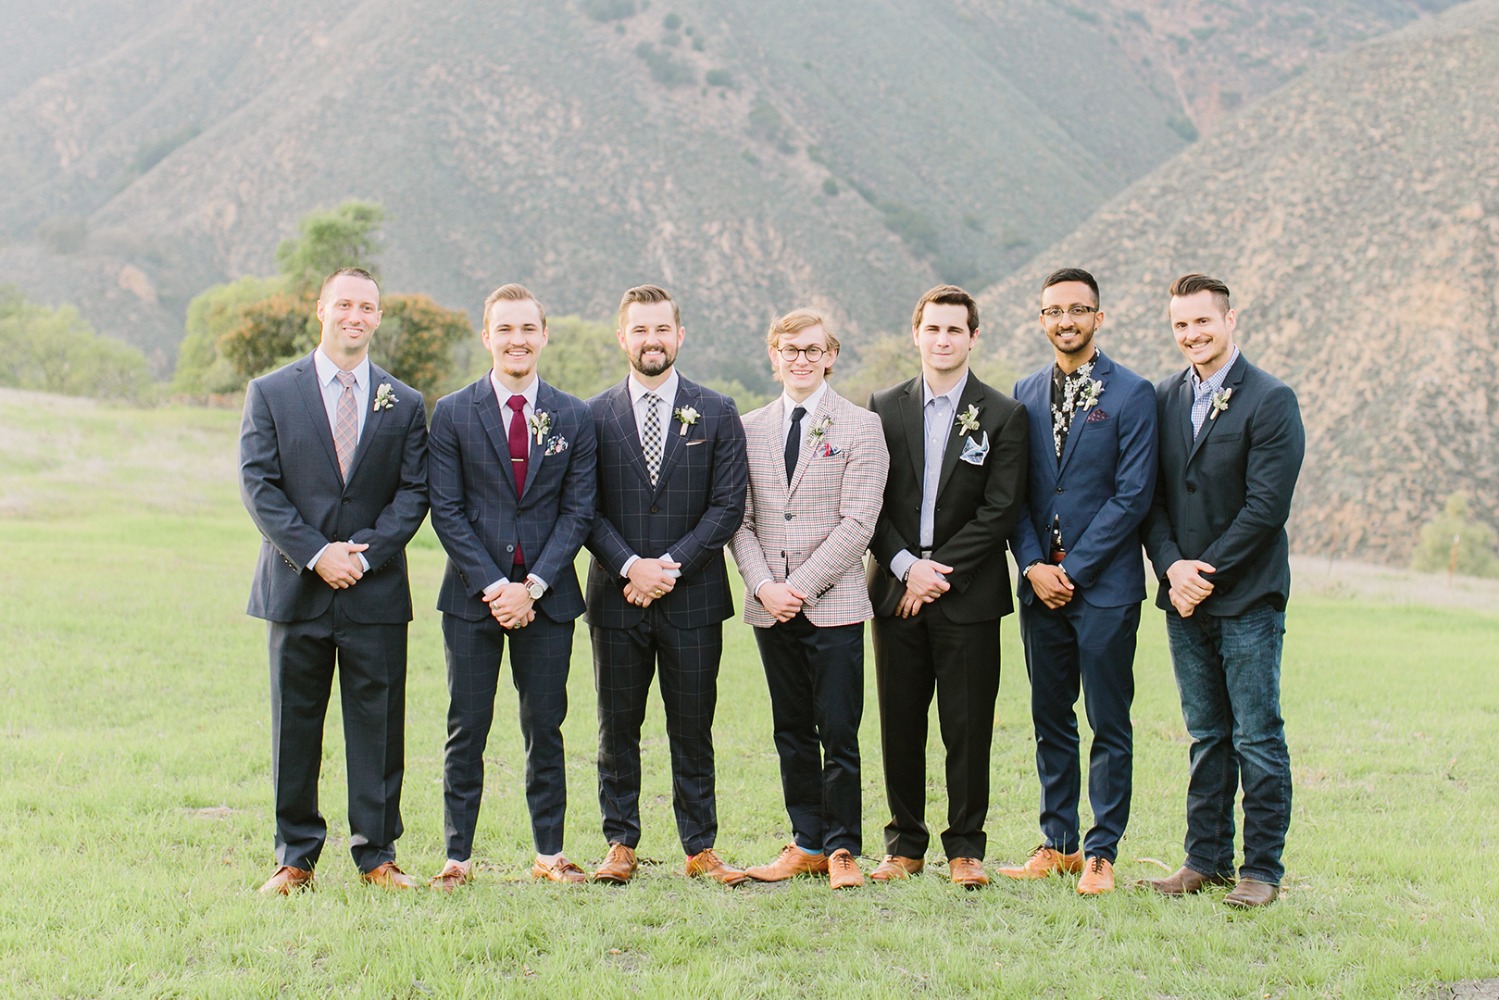 groomsmen in mismatched wedding suits